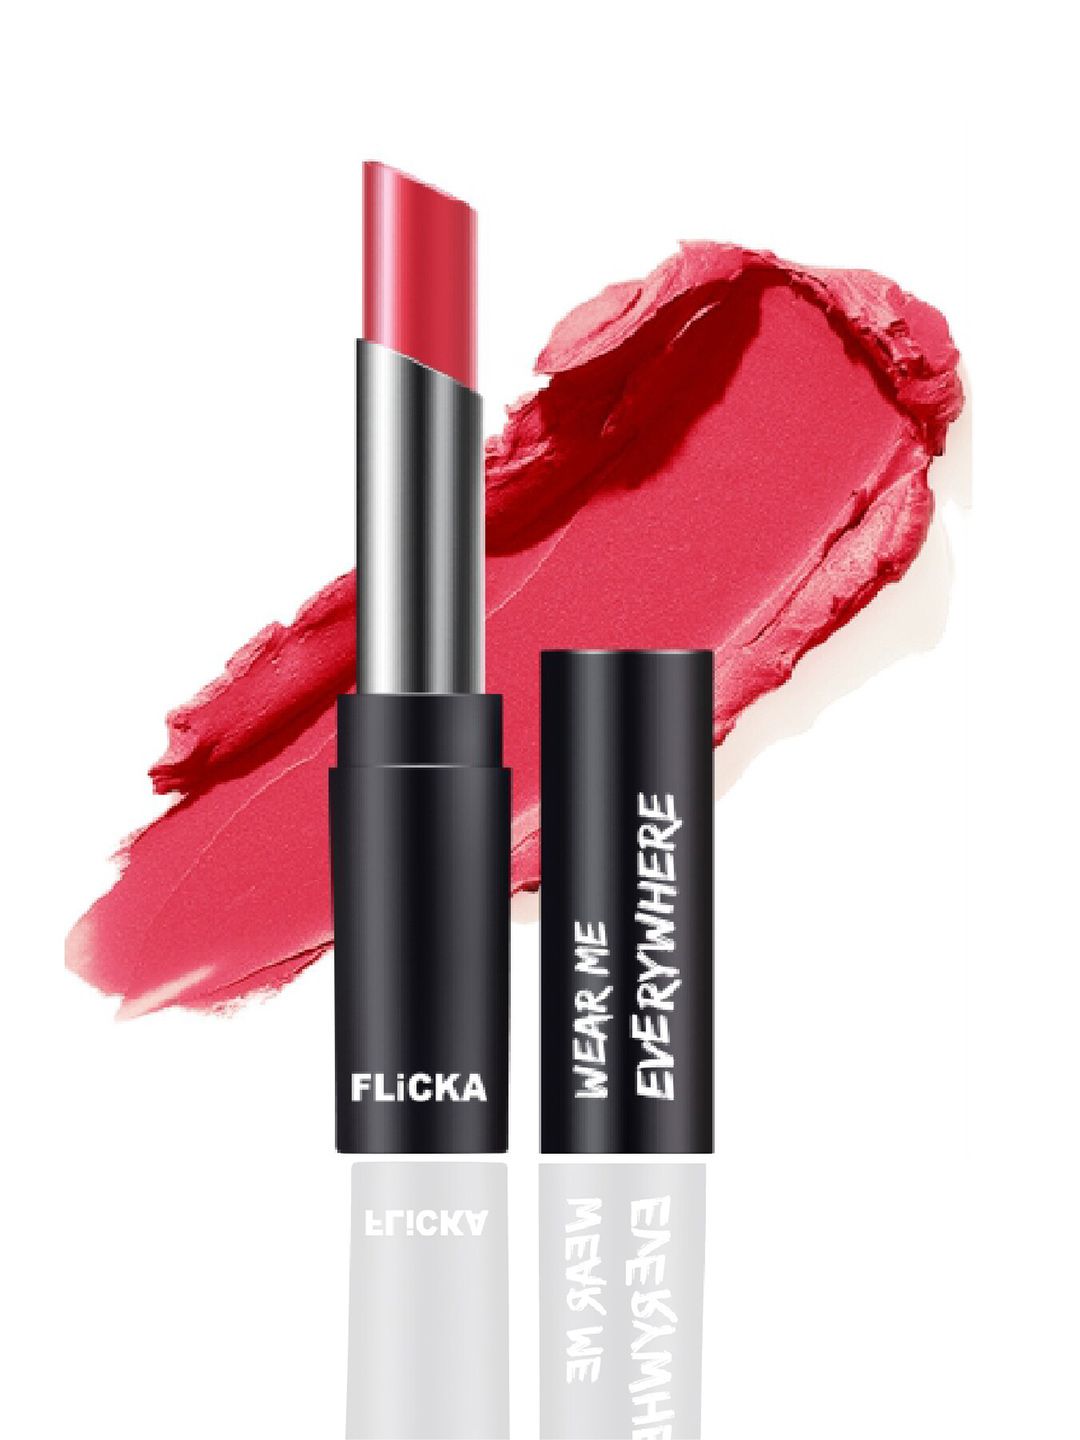 FLiCKA Wear Me Everywhere Creamy Matte Lipstick - Fire To The Rain 04 Price in India